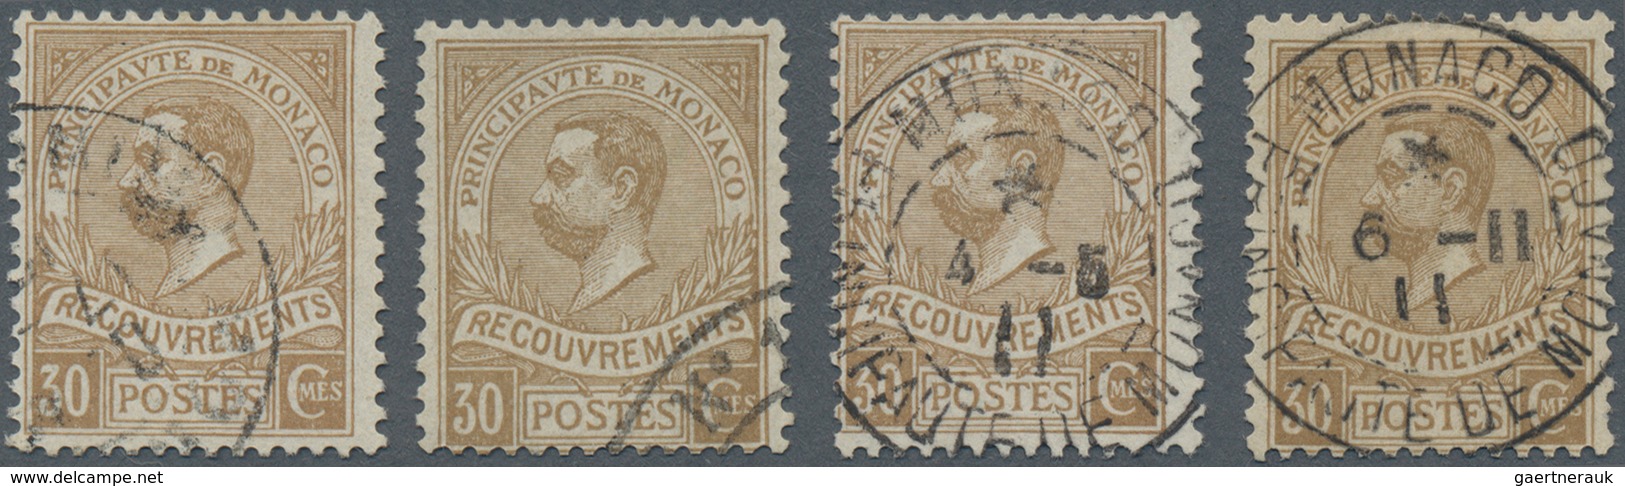 Monaco - Portomarken: 1911, Postage Due 30c. Pale Brown Small Group With Four Fine Used Copies Of Th - Portomarken